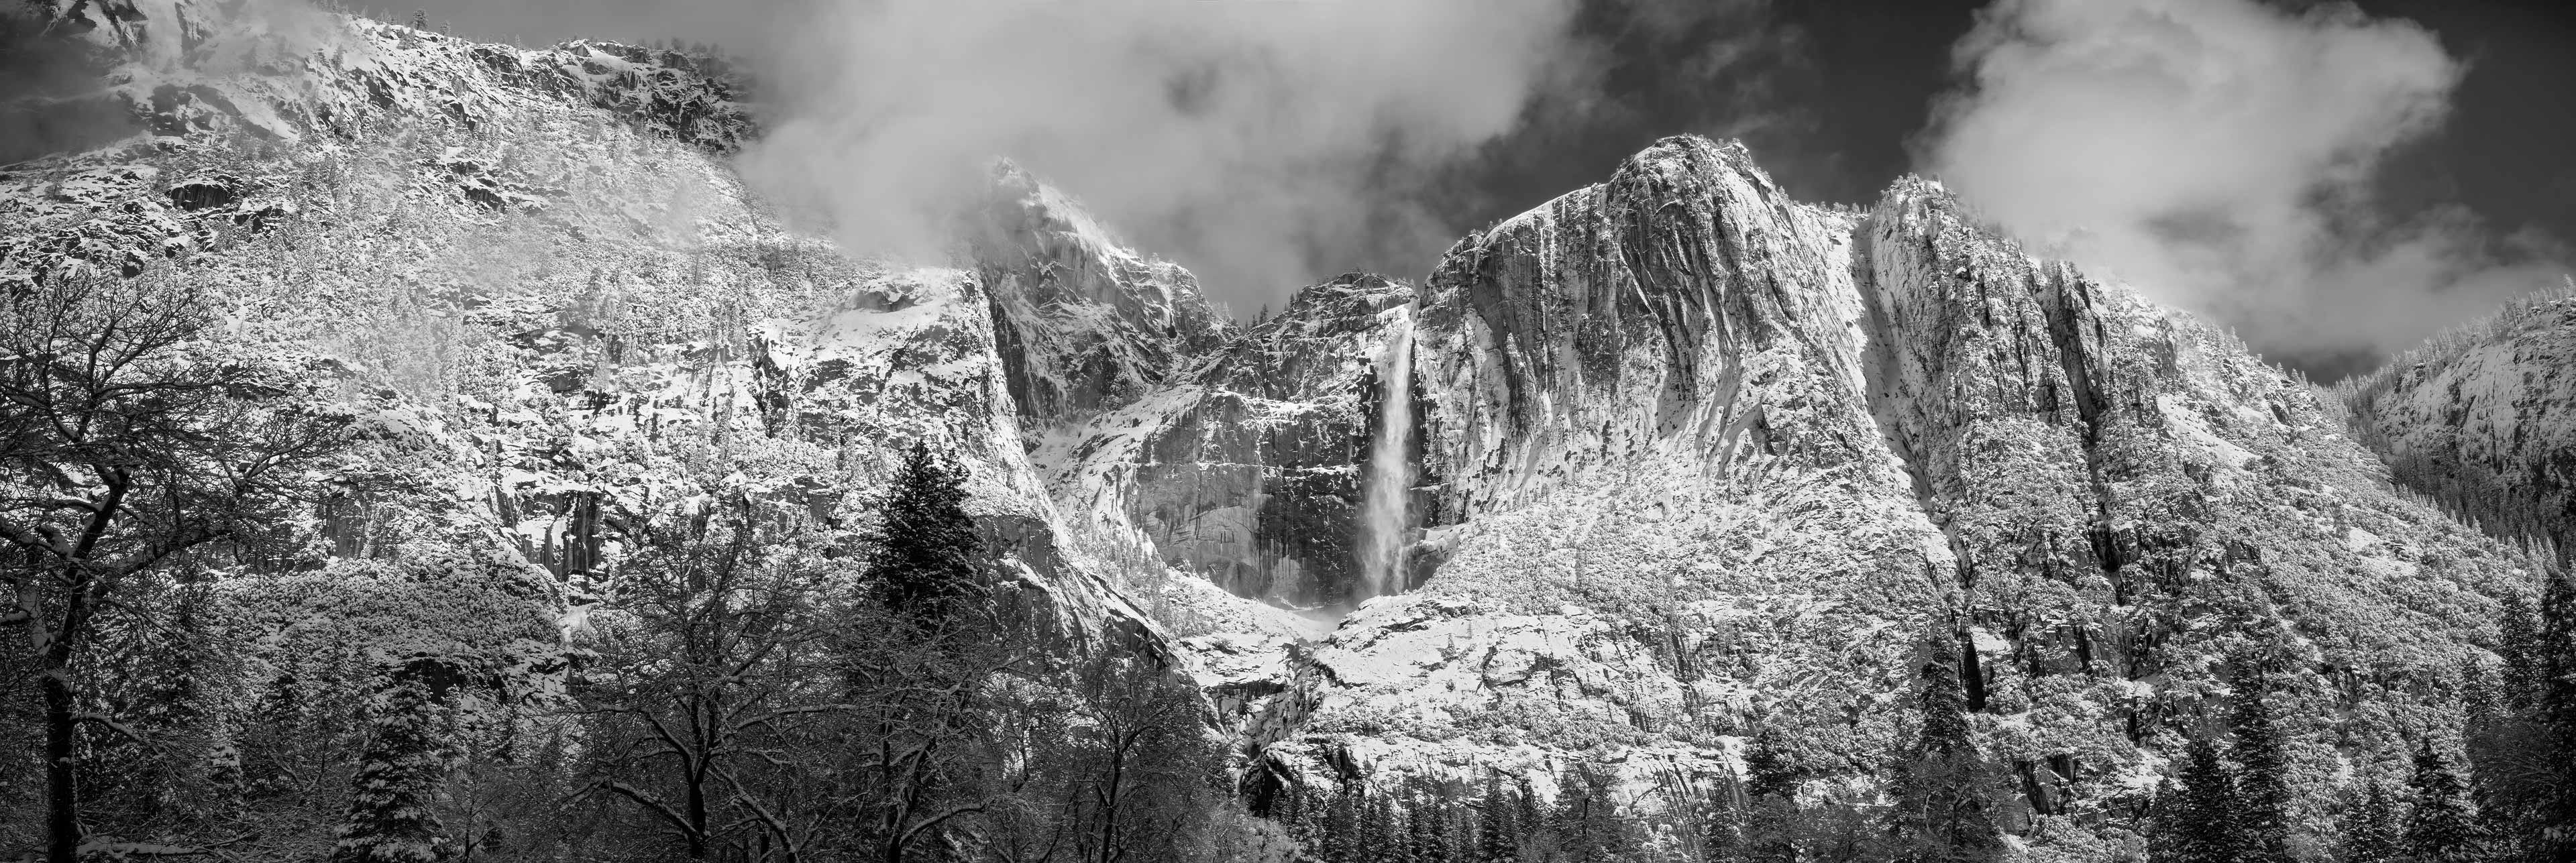 Yosemite Falls,  Yosemite National Park, California, USA